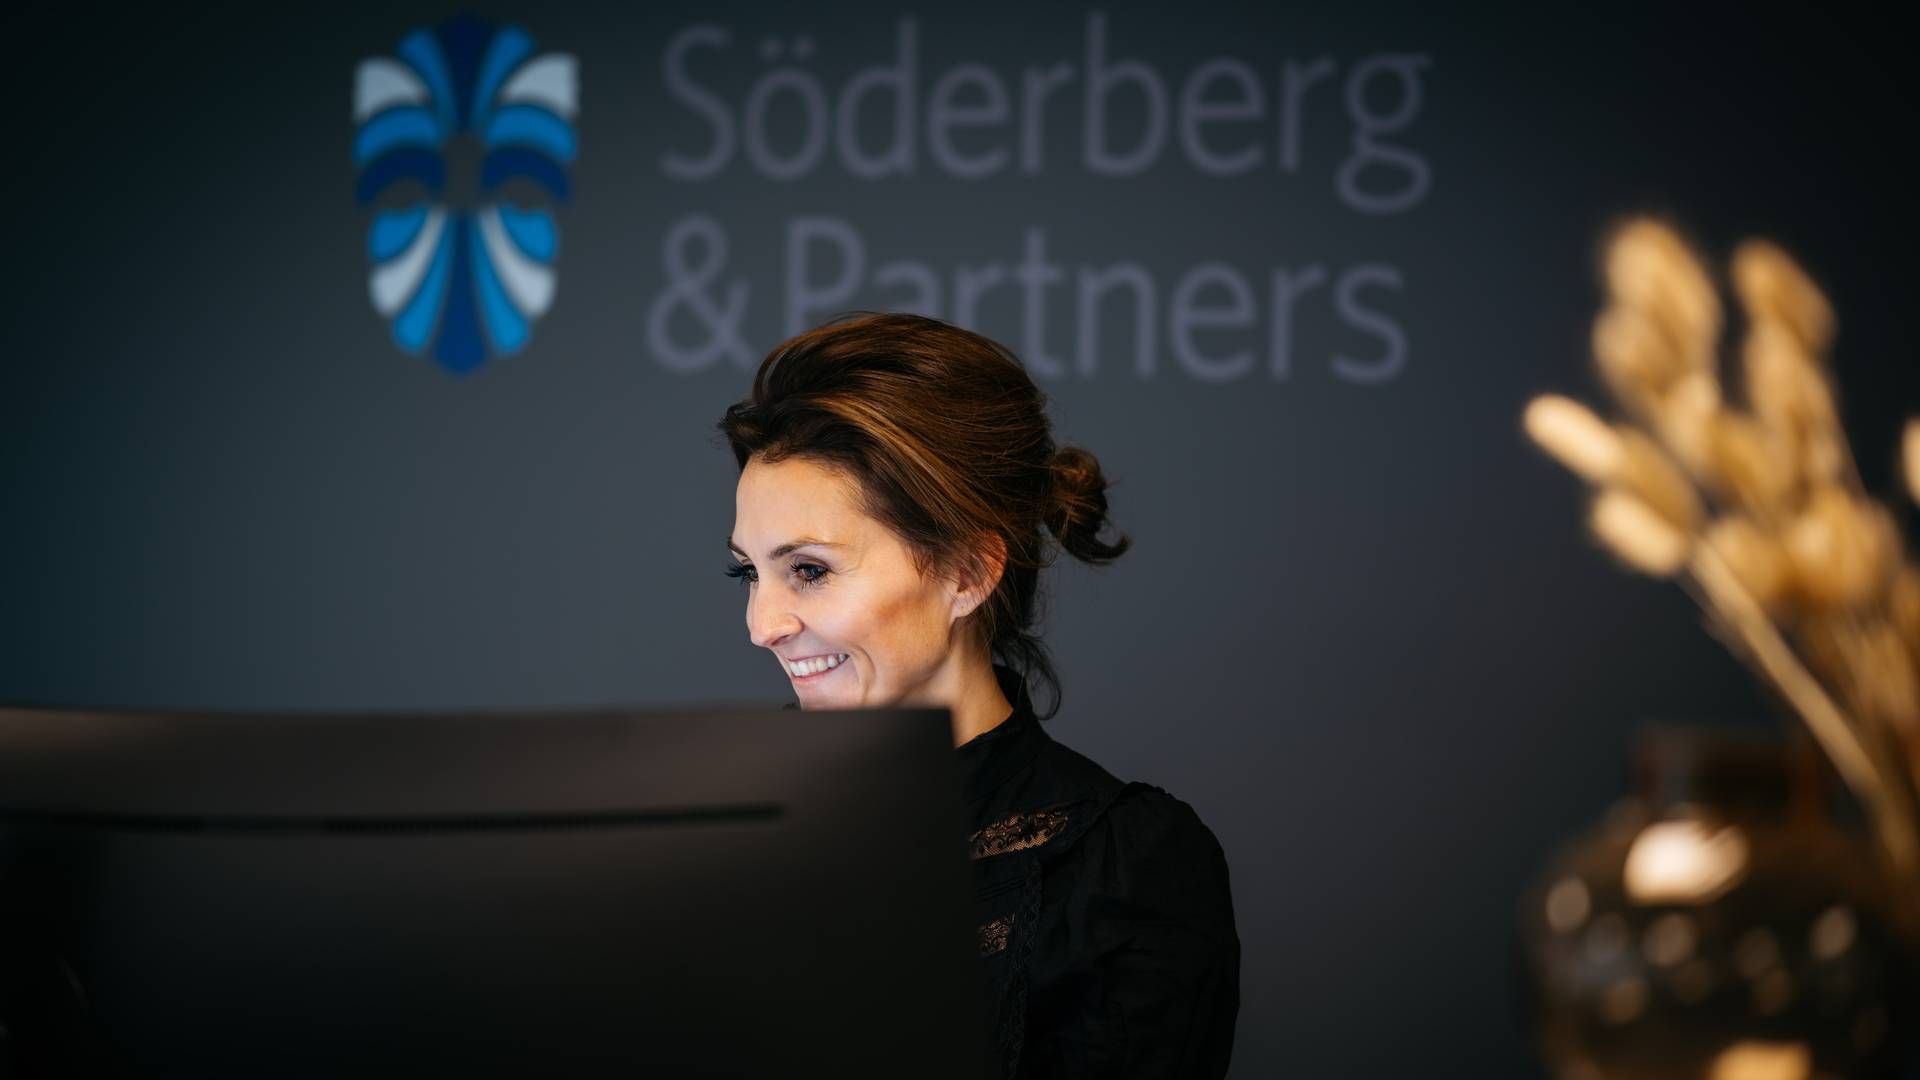 Söderberg & Partners kjøper 51 prosent av Losen AS. | Foto: Söderberg & Partners